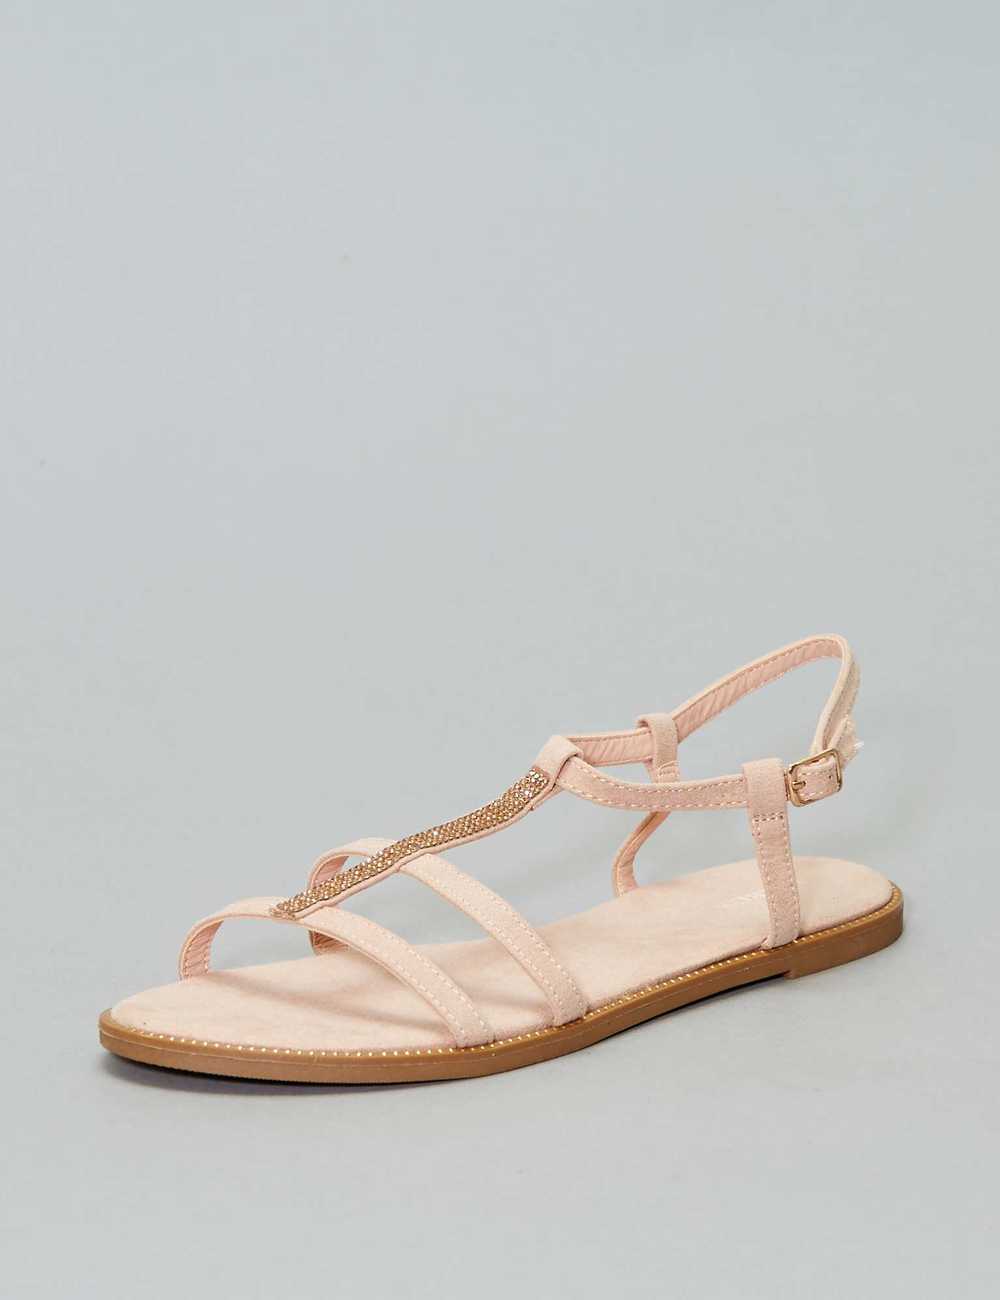 Barjeel Uno Men's Arabic Sandals | Online Shopping at Shopmanzil UAE